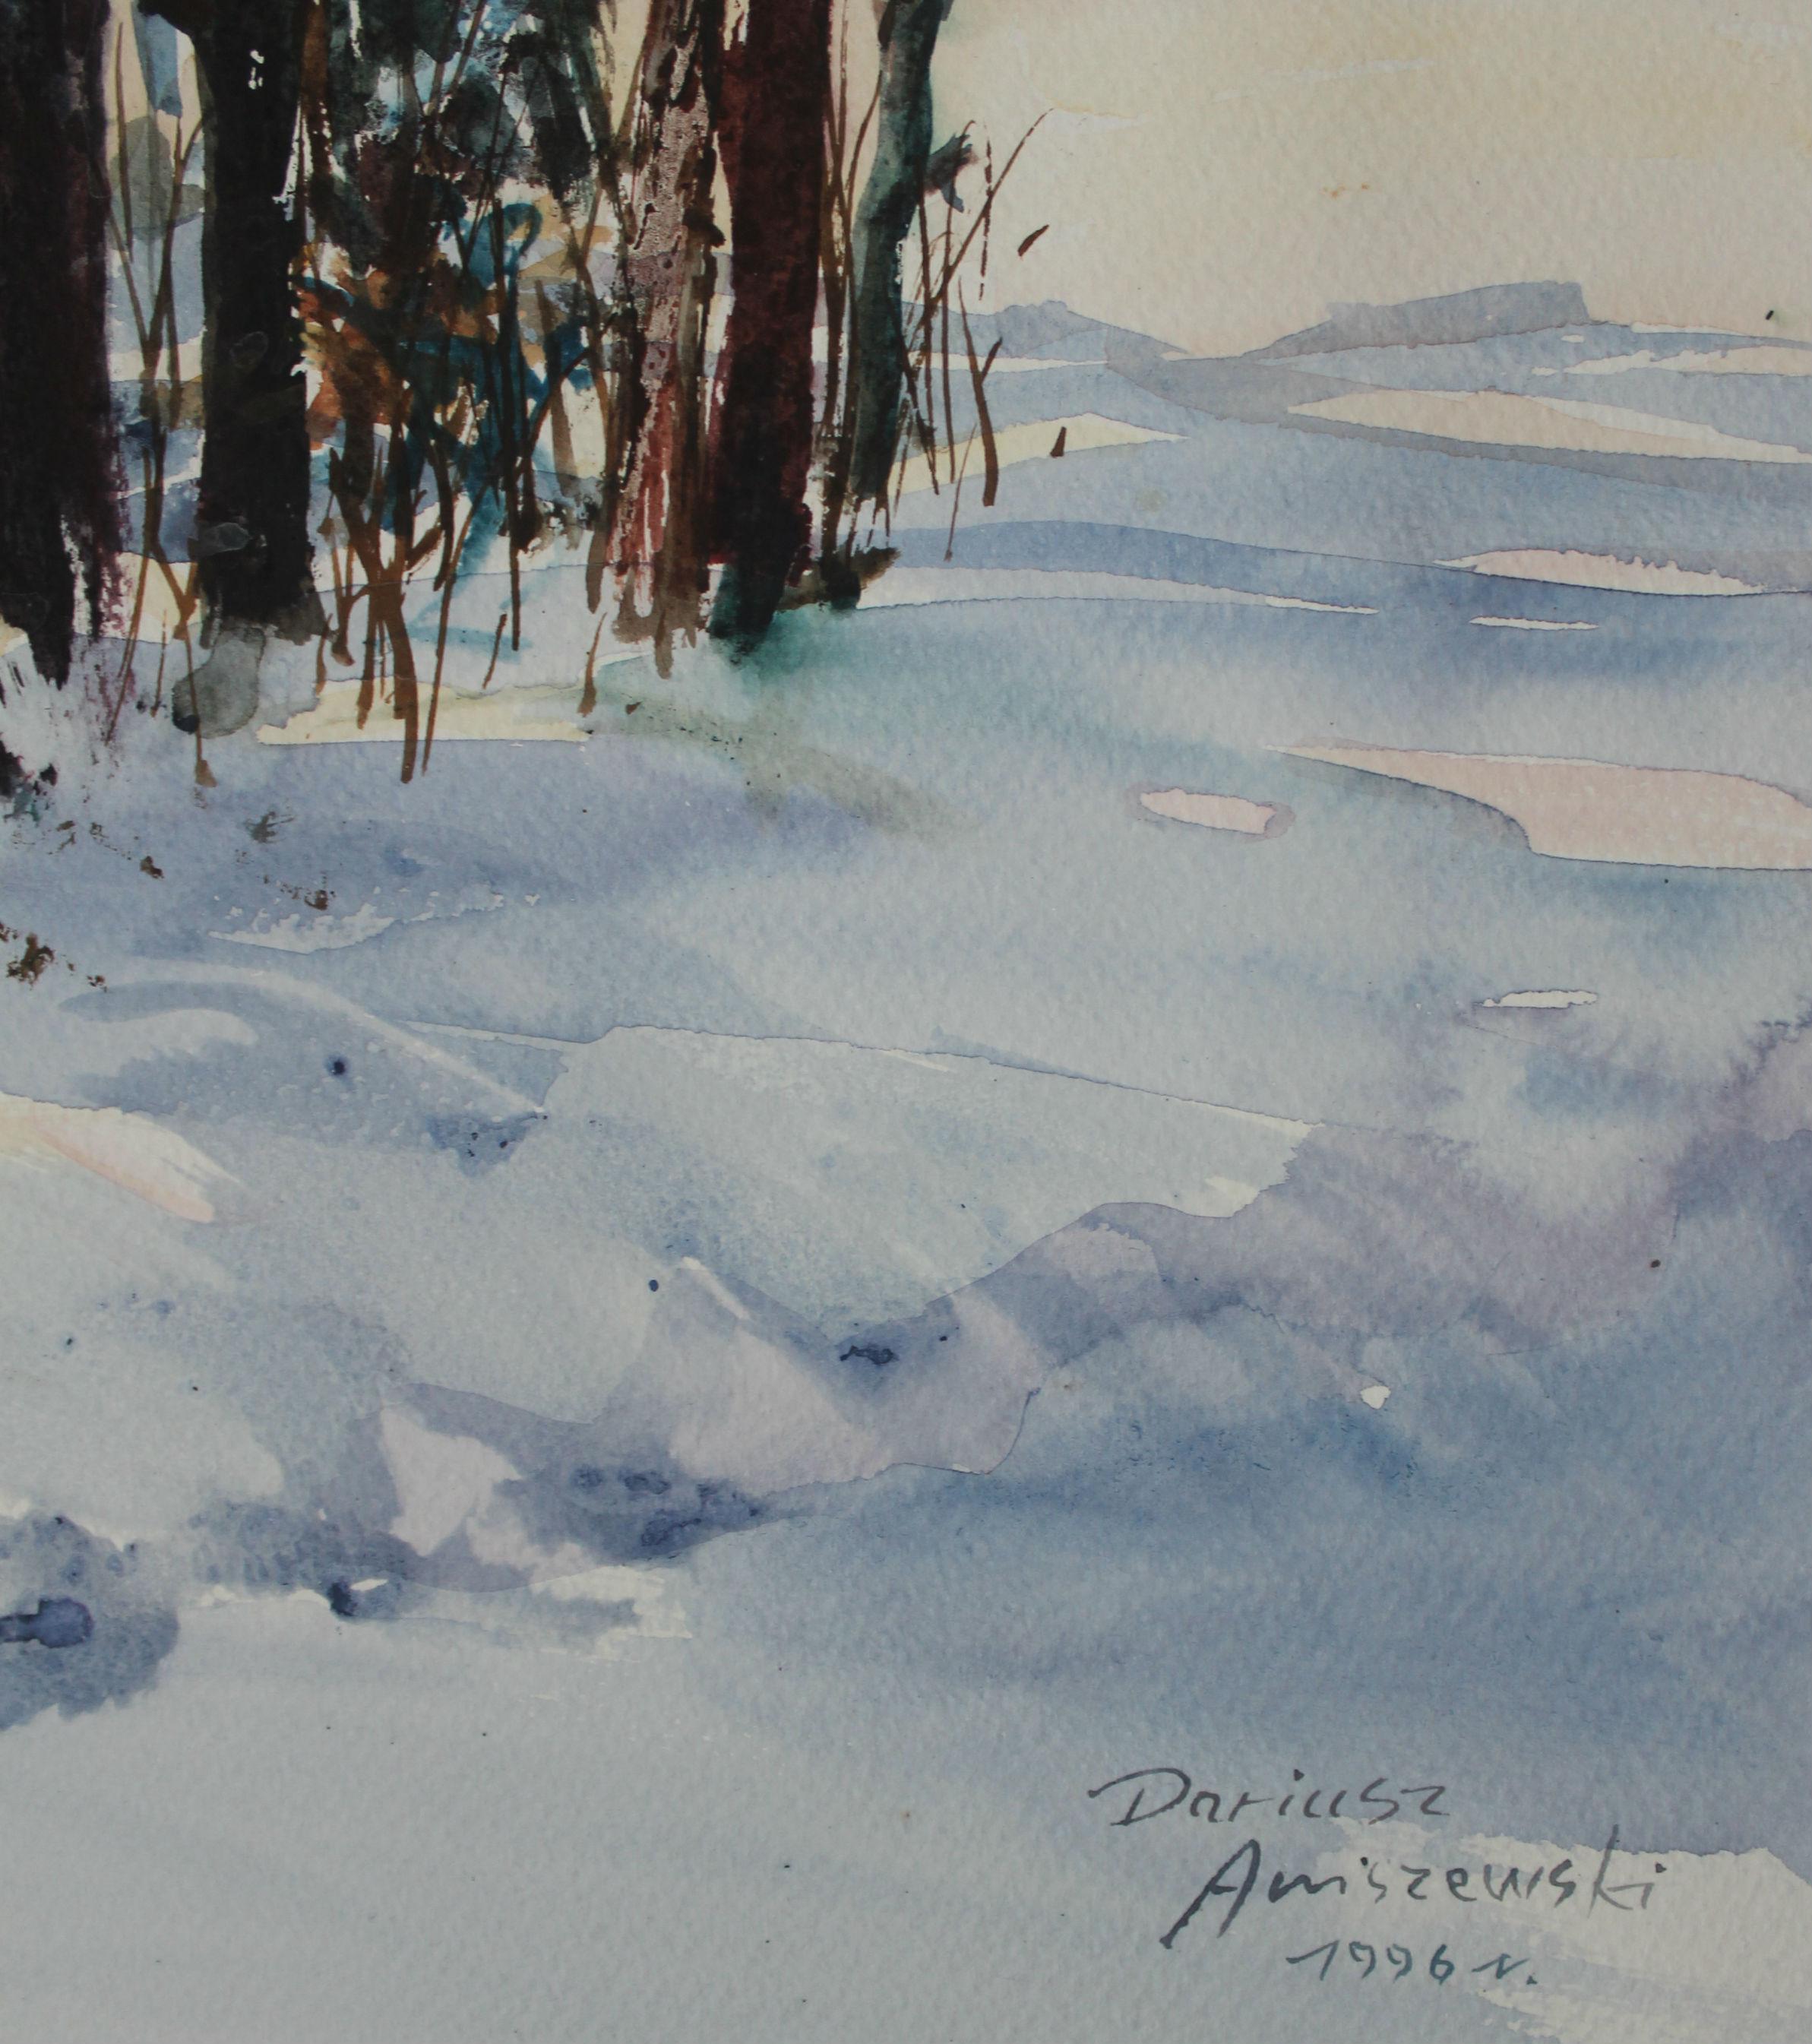 winter landscape watercolor